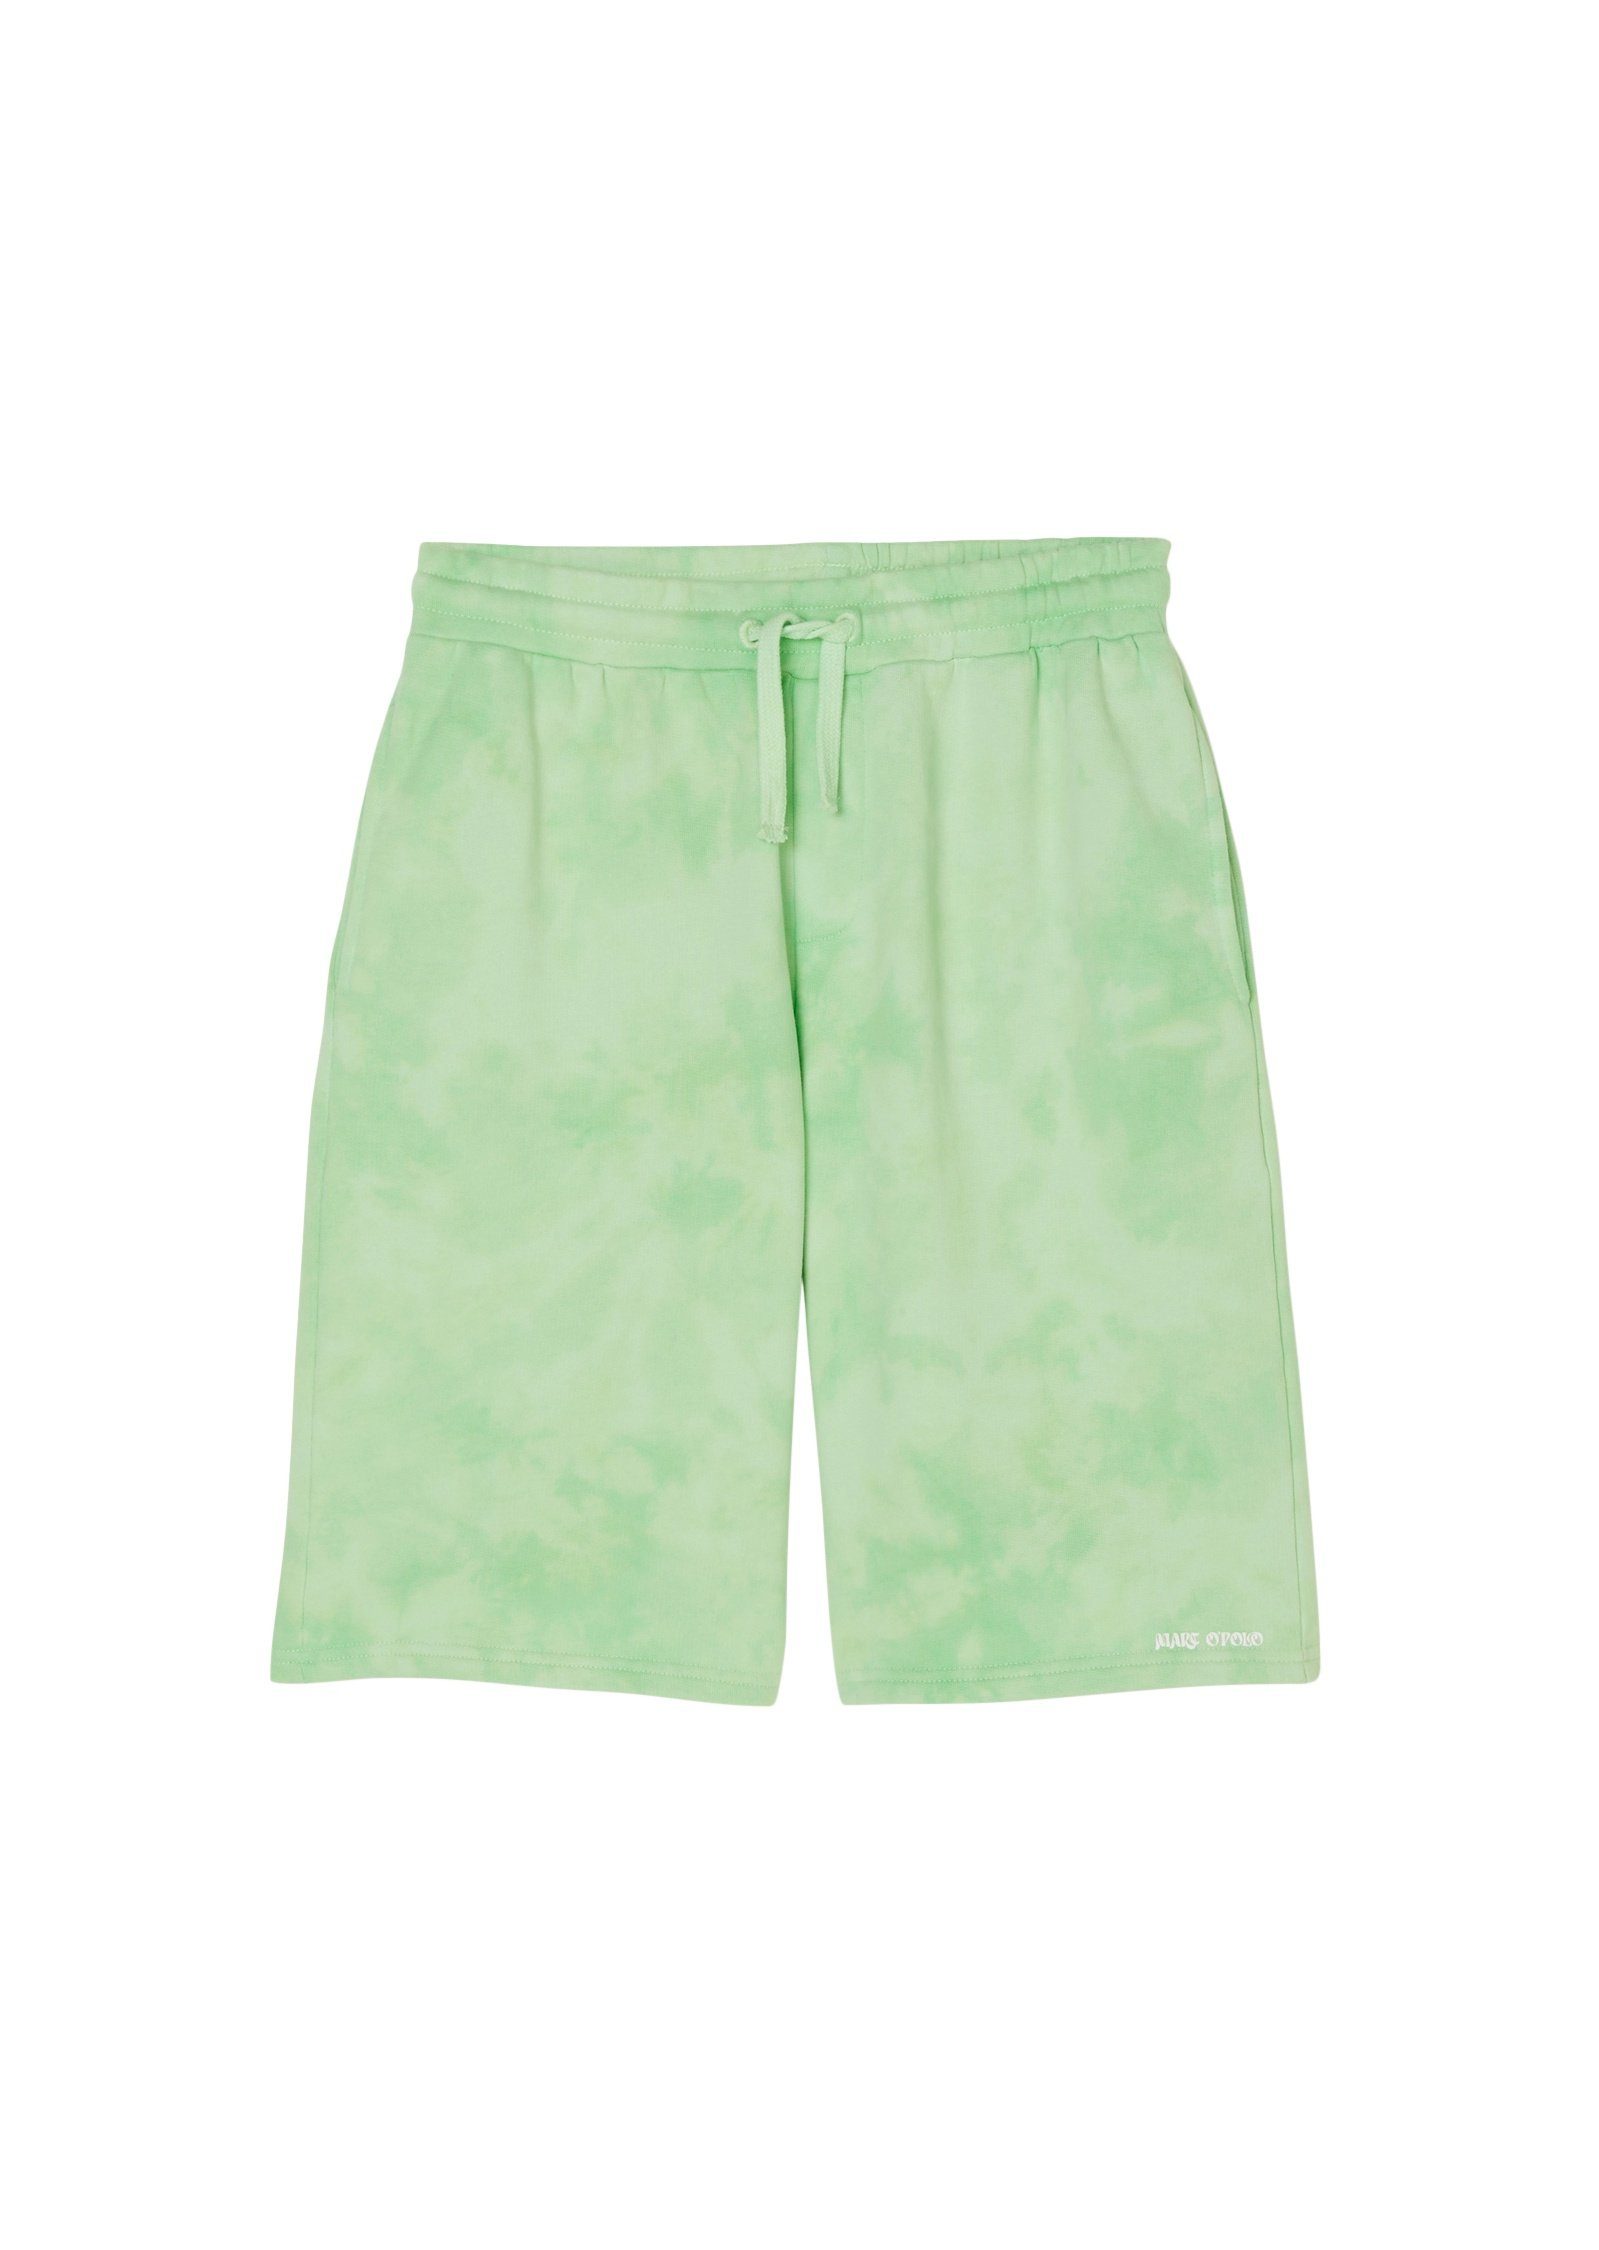 Marc O'Polo Shorts im grün Batik-Dessin